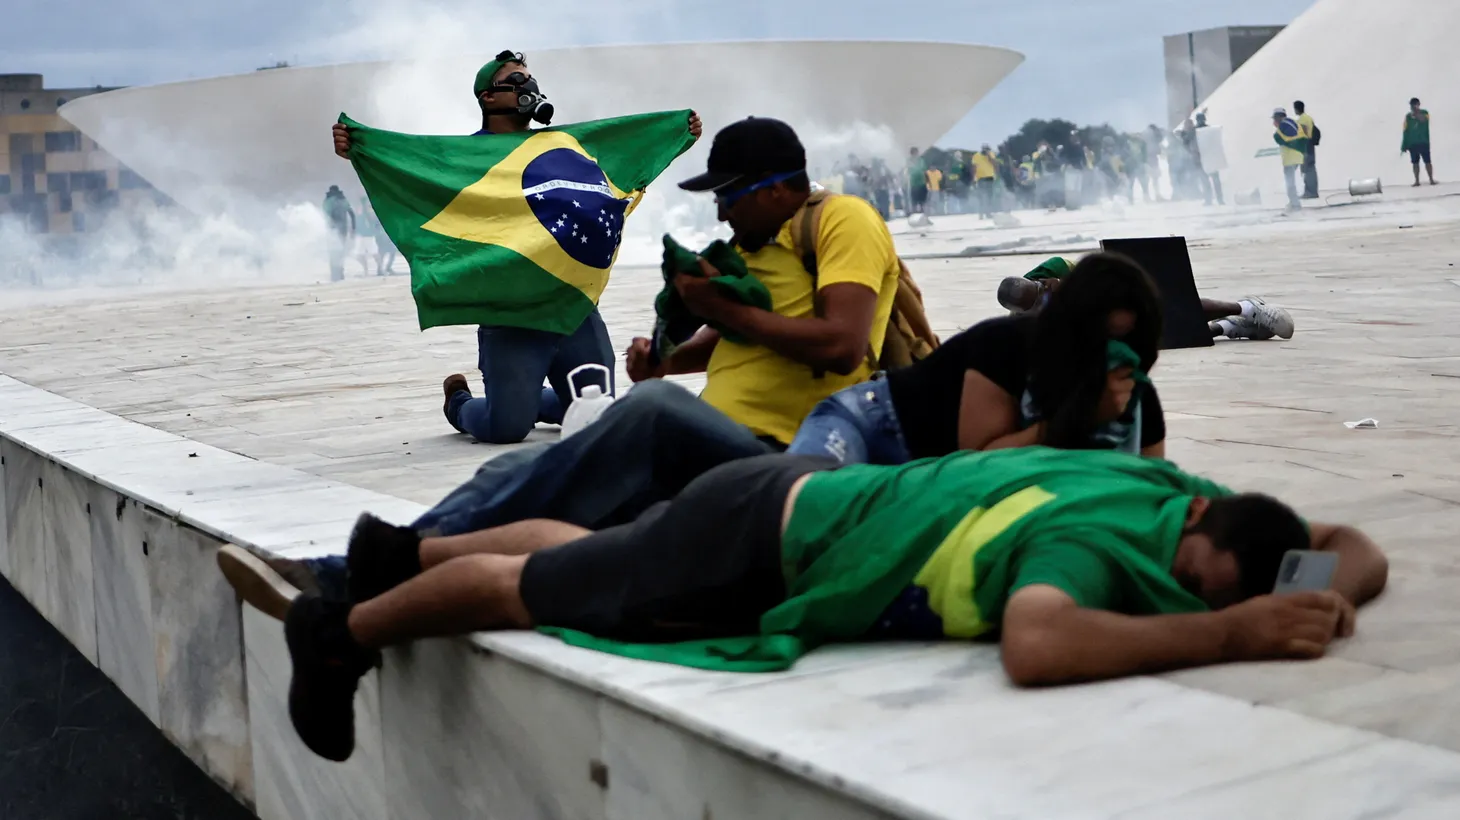 Supporters of Brazil's former President Jair Bolsonaro react during a demonstration against President Luiz Inacio Lula da Silva, outside Planalto Palace in Brasilia, Brazil, January 8, 2023.